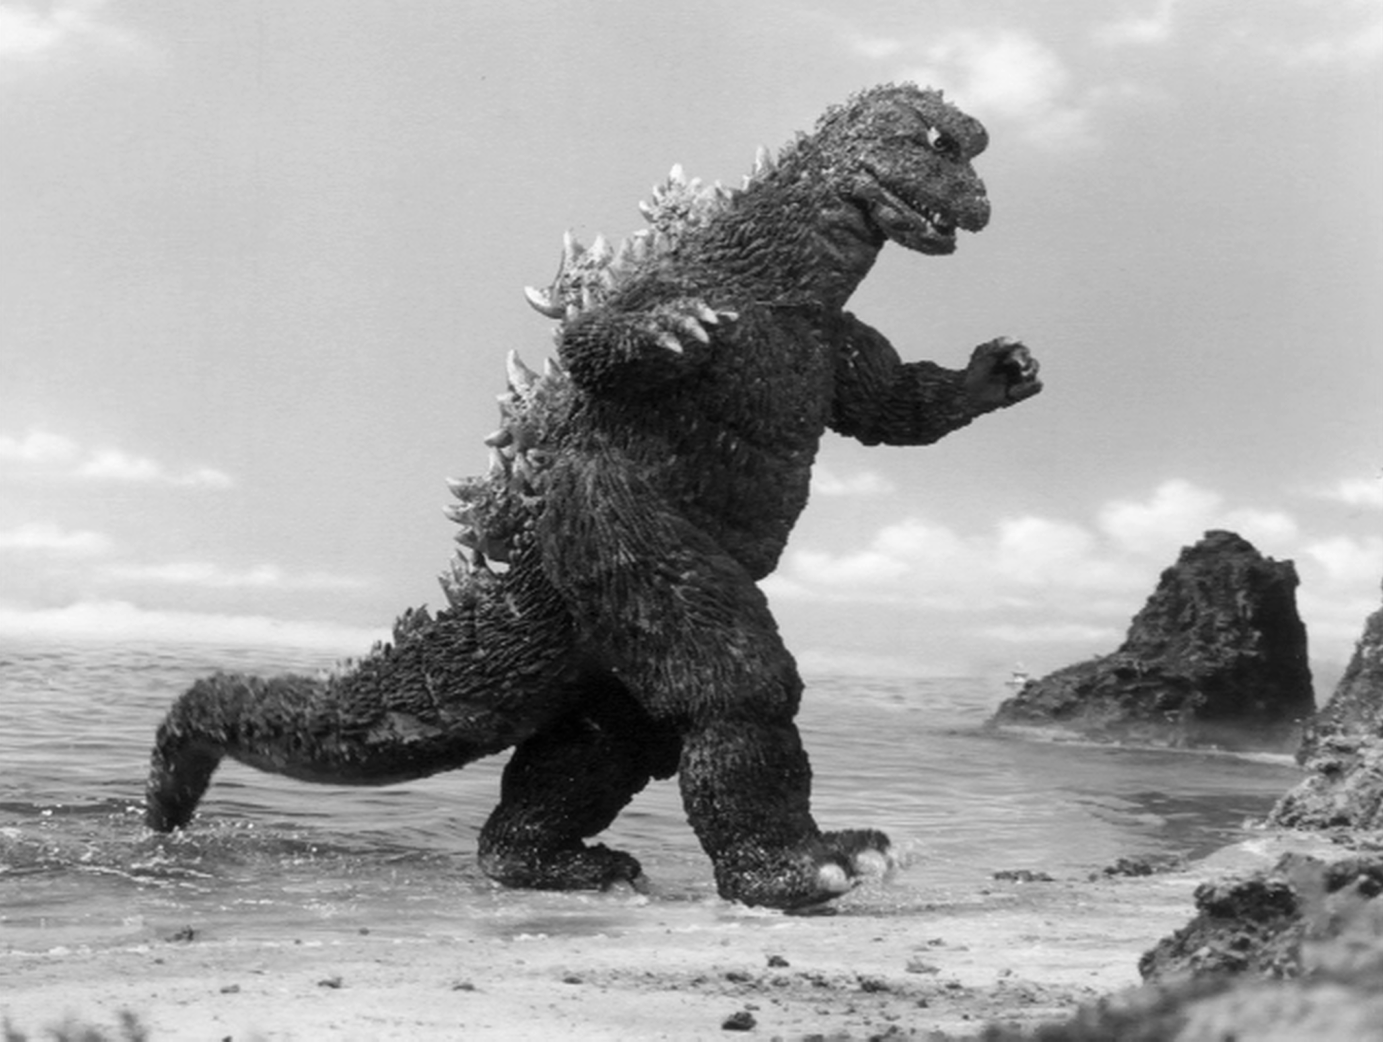 https://www.themarysue.com/wp-content/uploads/2015/06/Godzilla-9.gif